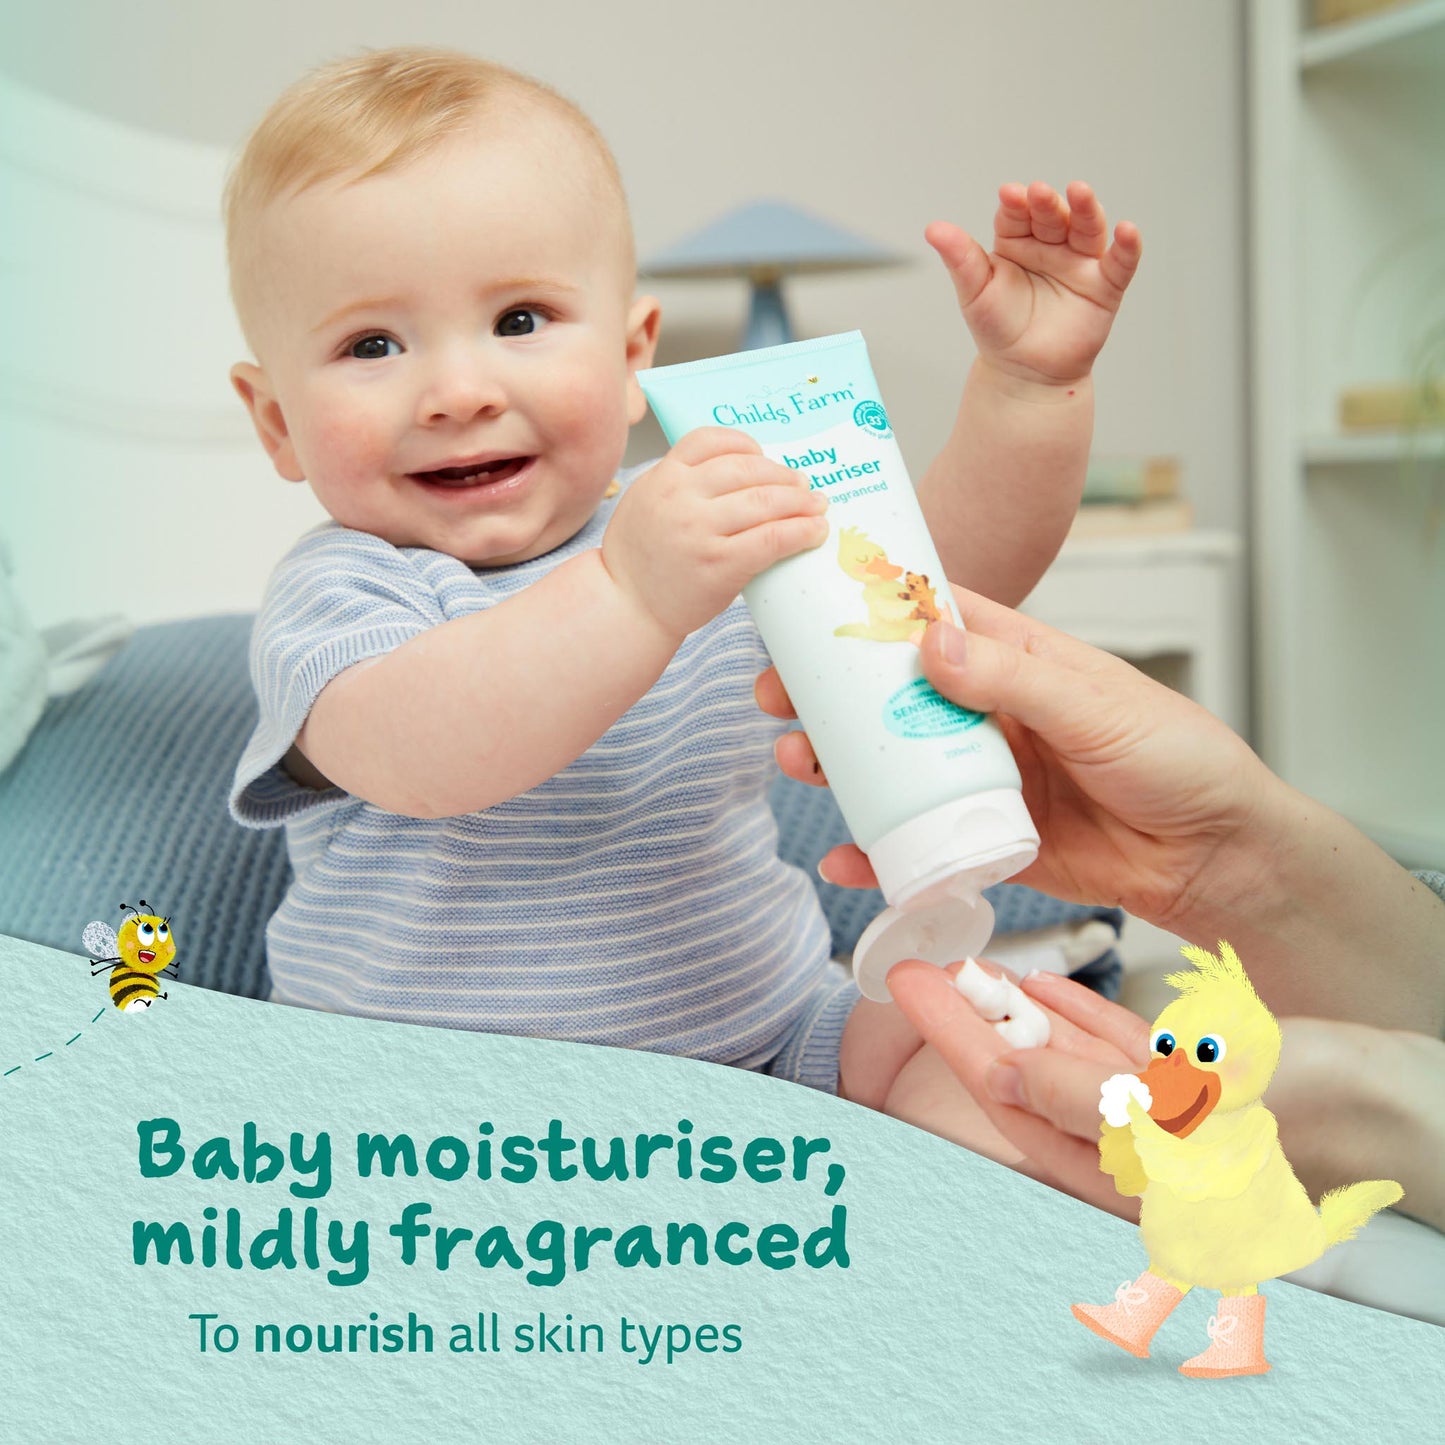 Childs Farm baby moisturiser mildly fragranced